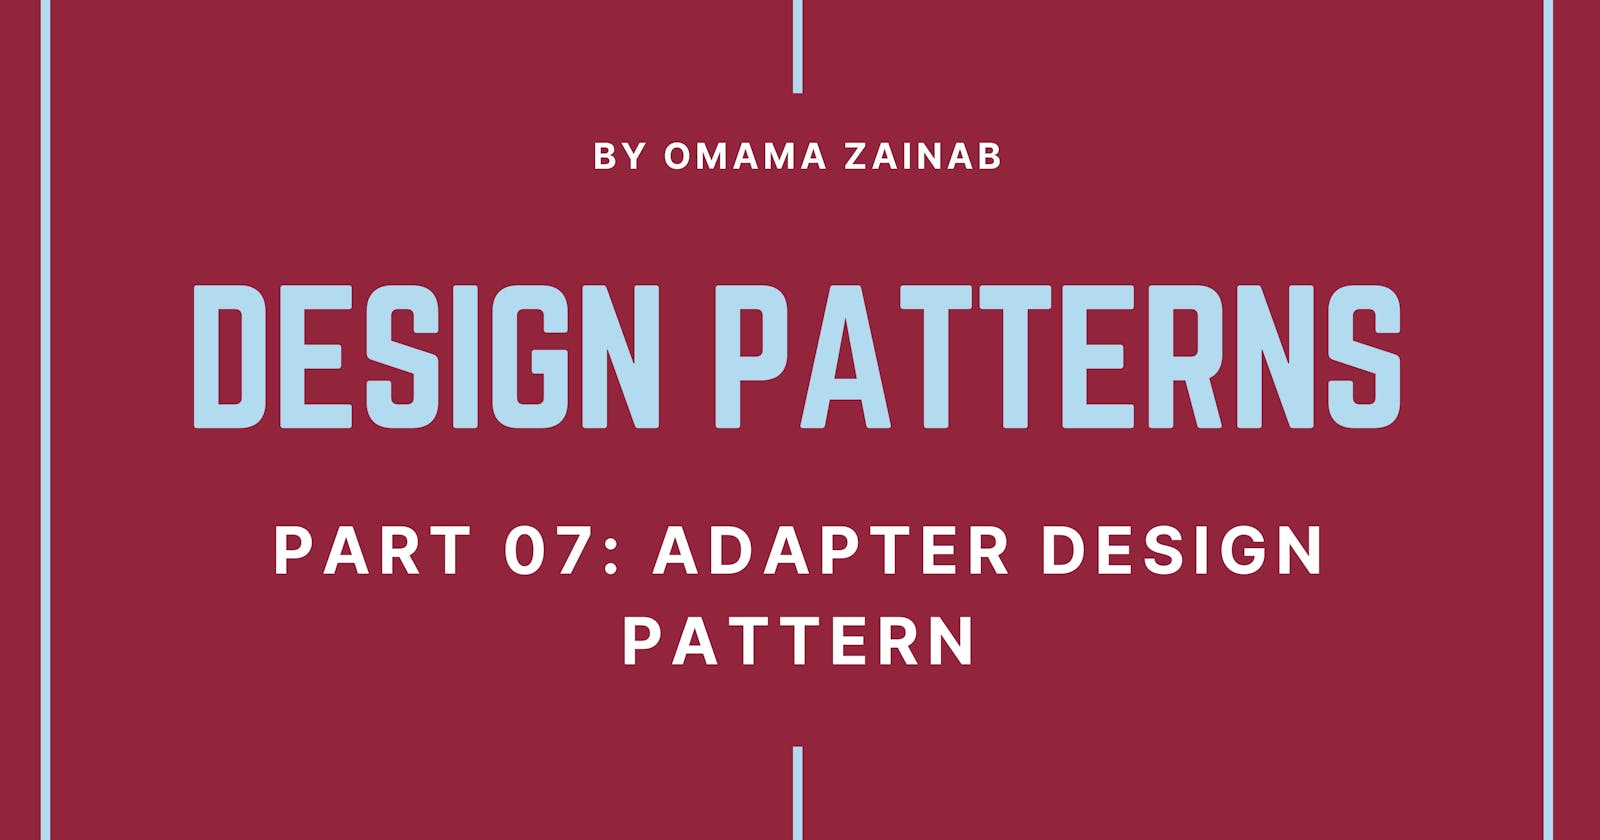 Part 07: Adapter Design Pattern